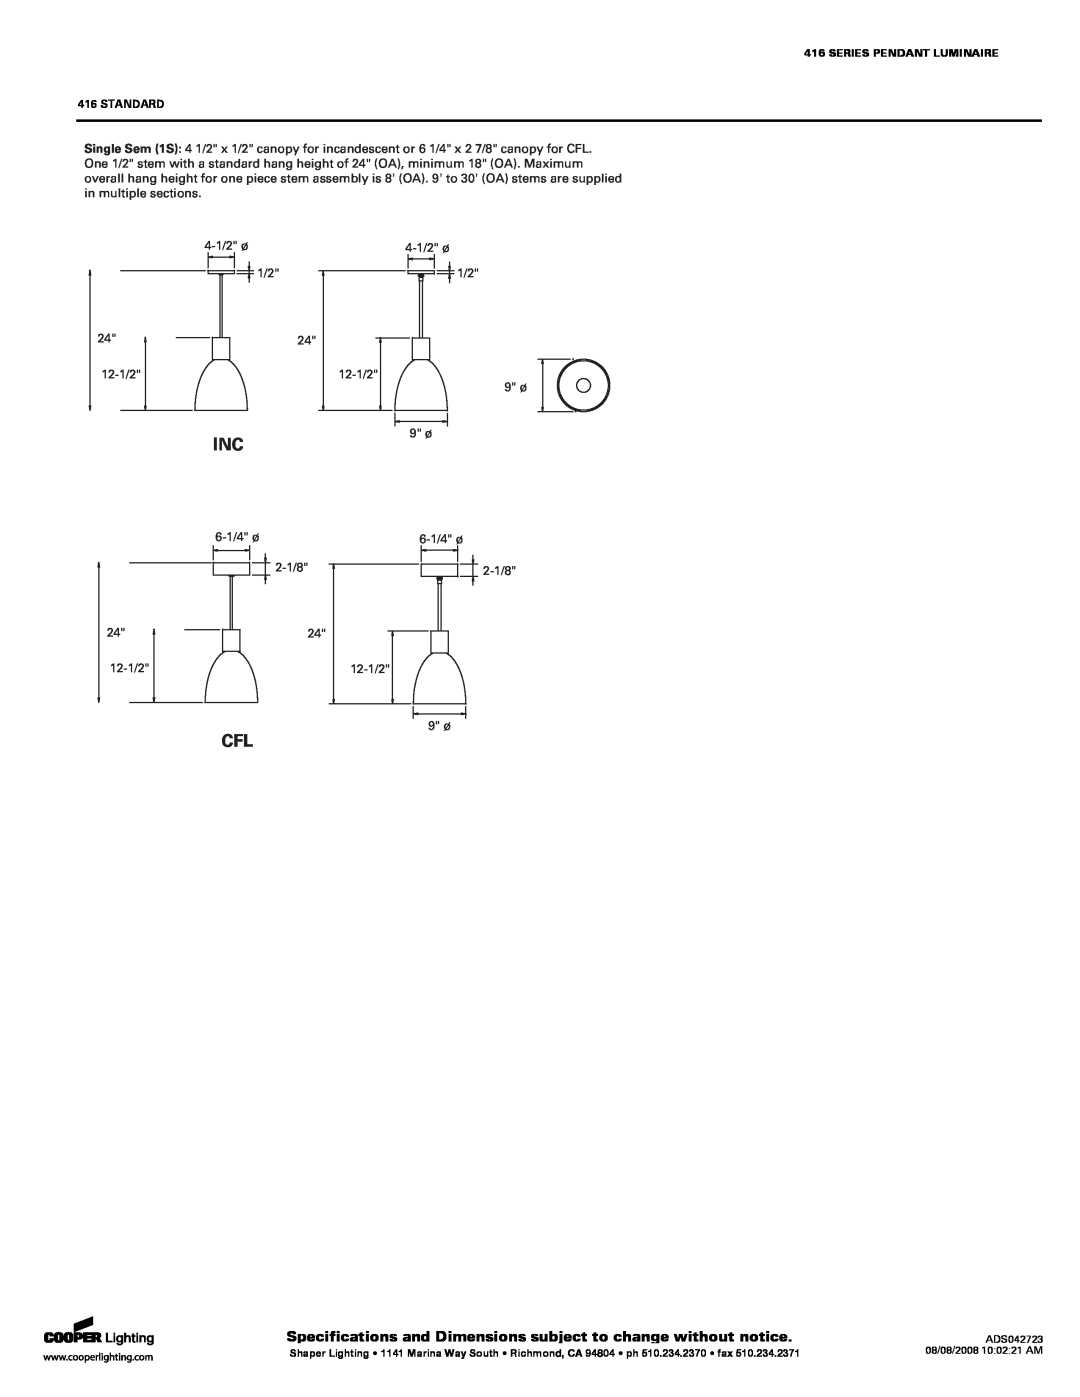 Cooper Lighting 416 SERIES specifications Standard 